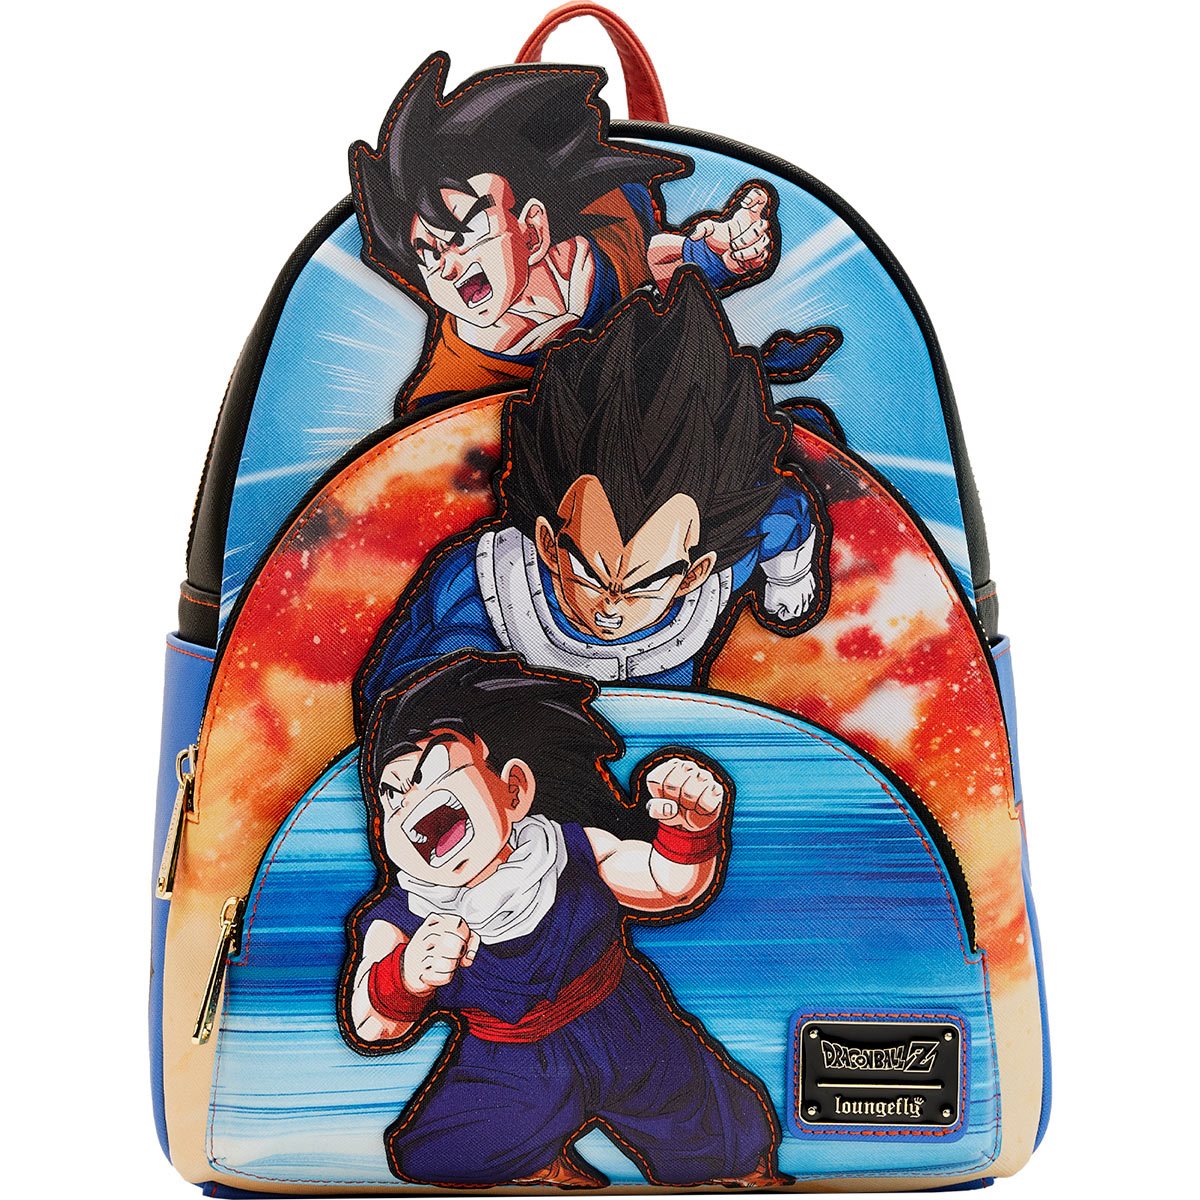 Dragon Ball Z Goku Mini-Backpack - Entertainment Earth